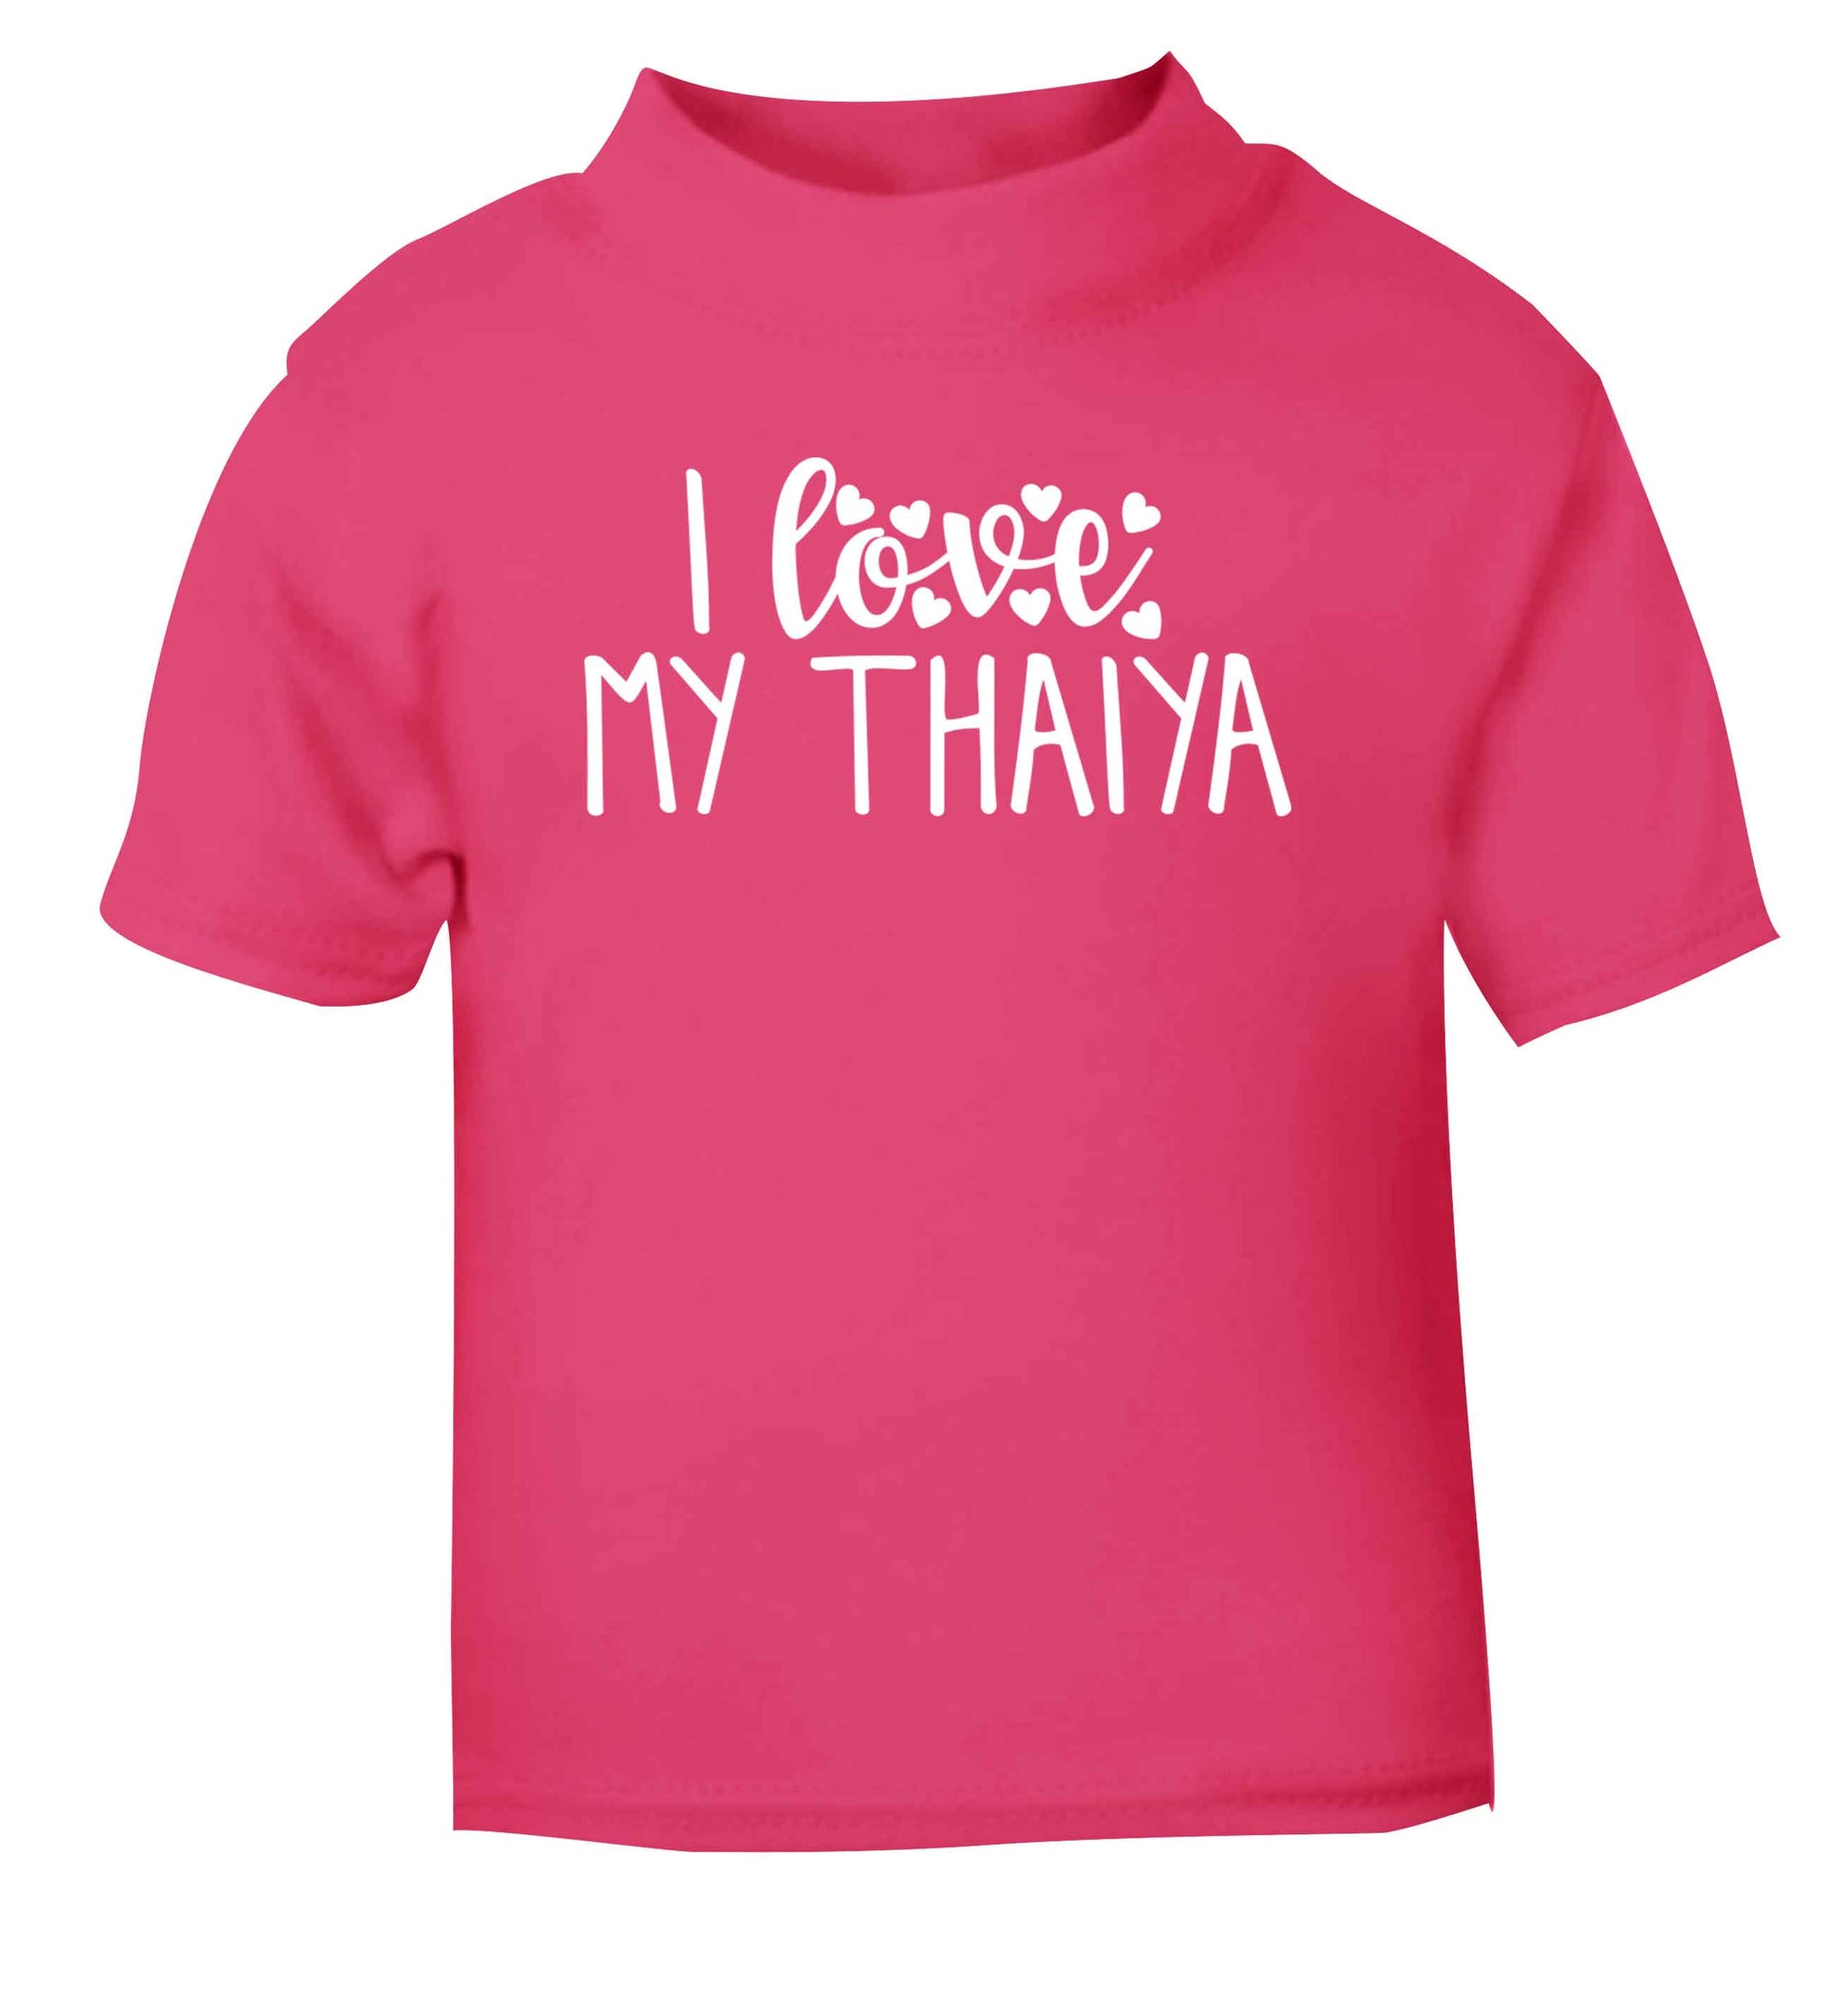 I love my thaiya pink Baby Toddler Tshirt 2 Years